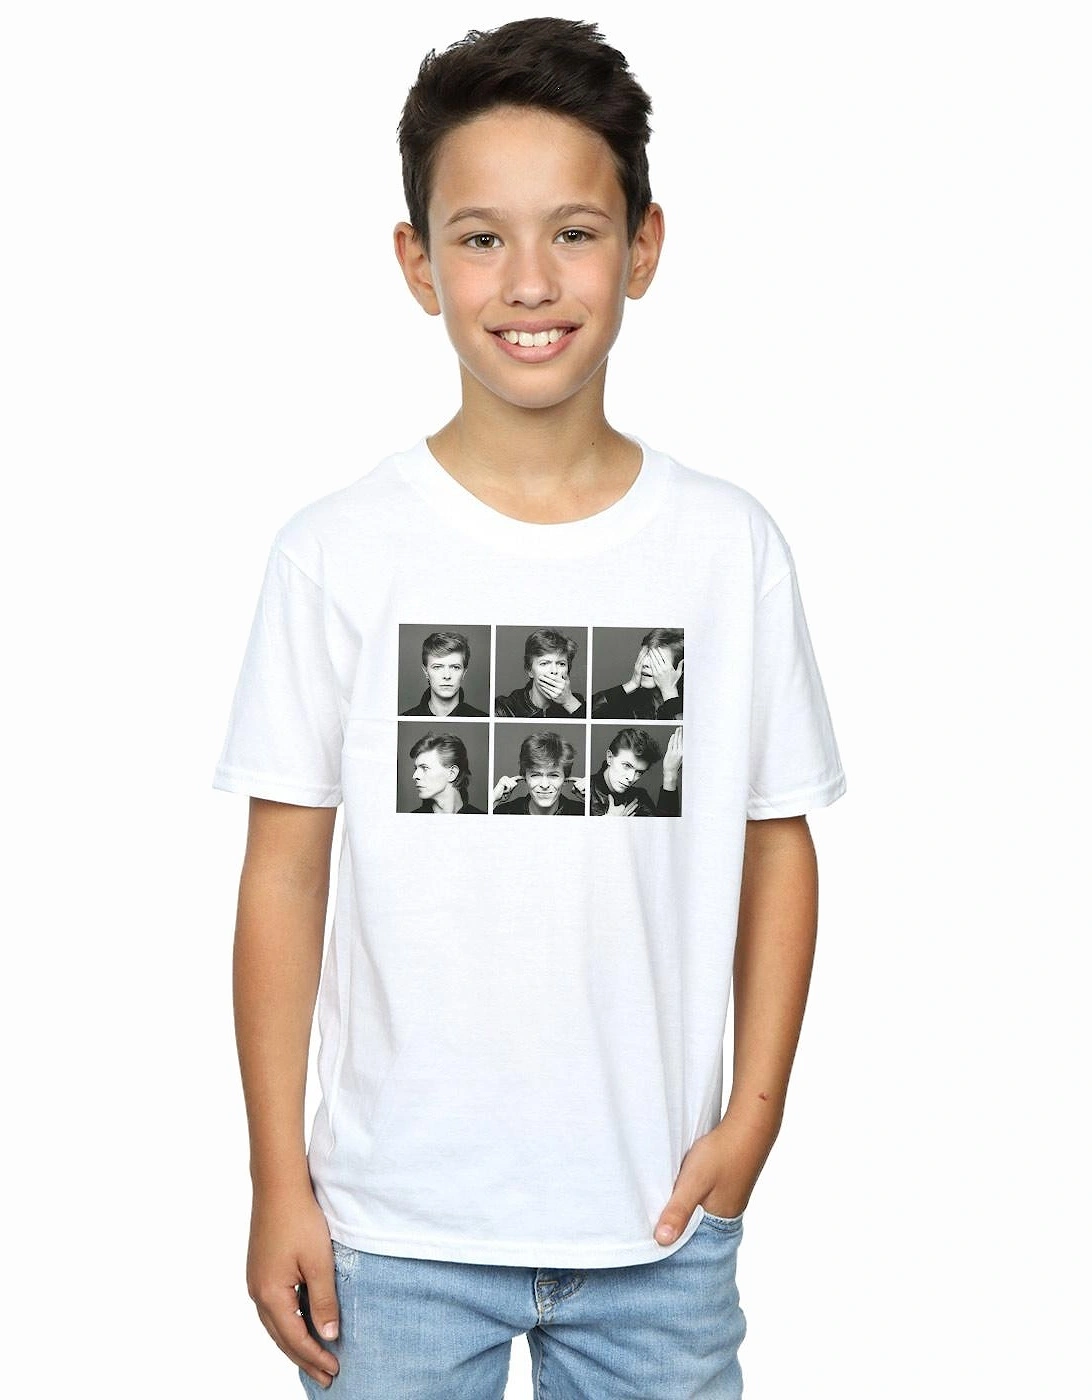 Boys Photo Collage T-Shirt